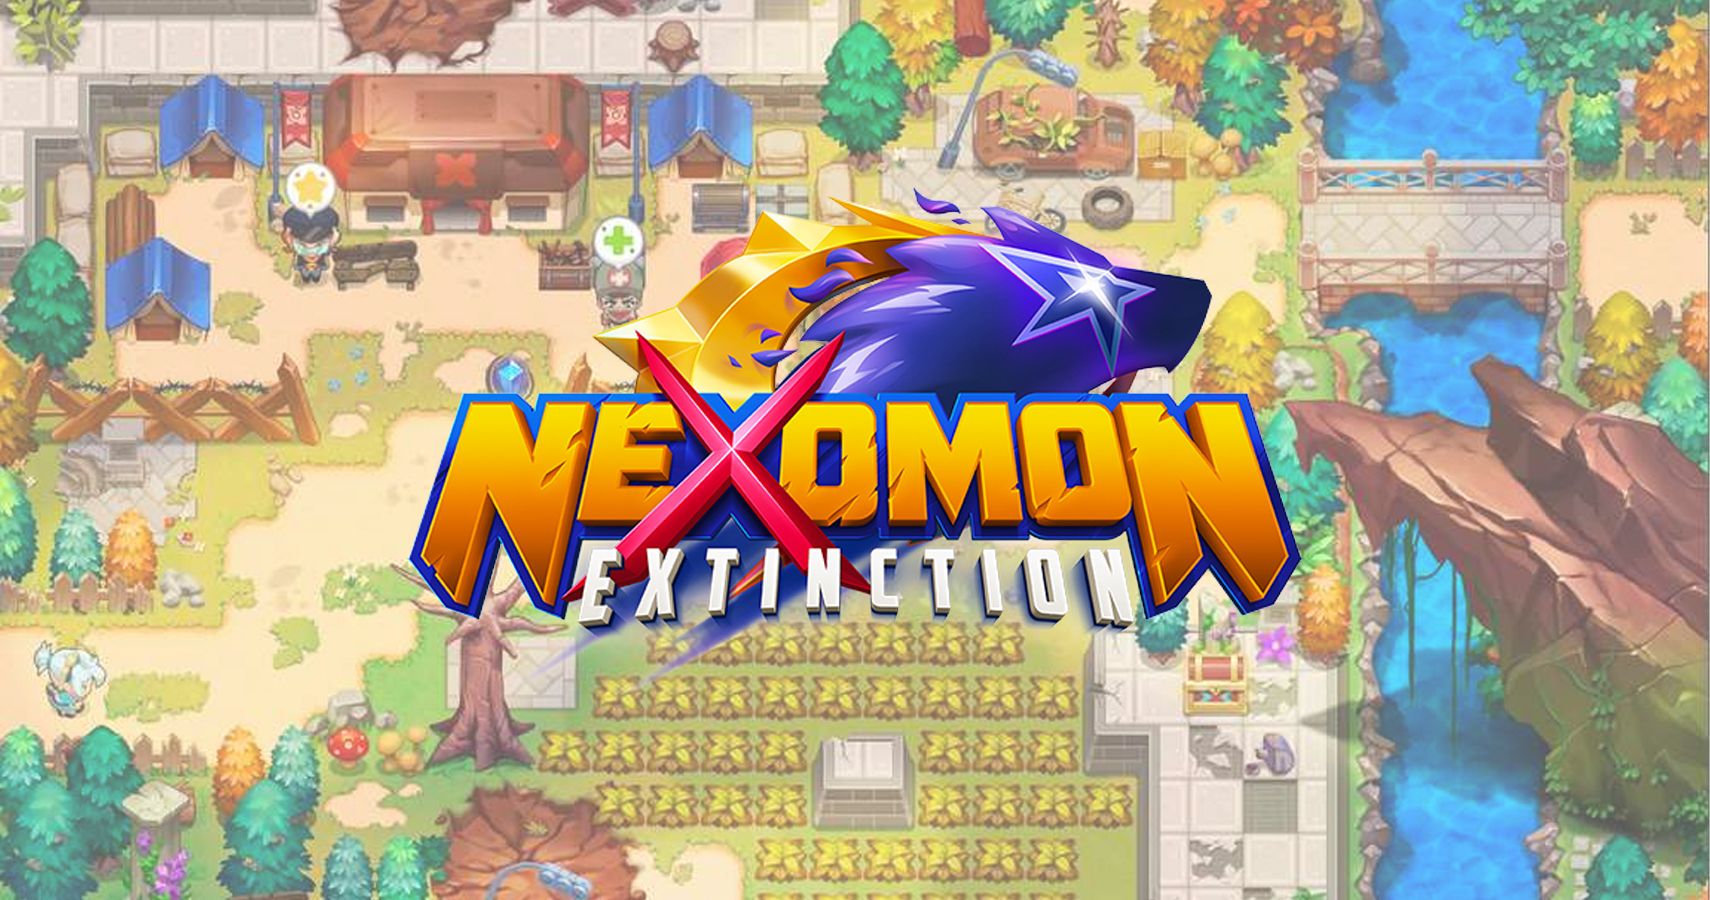 nexomon extinction redeem code 2021